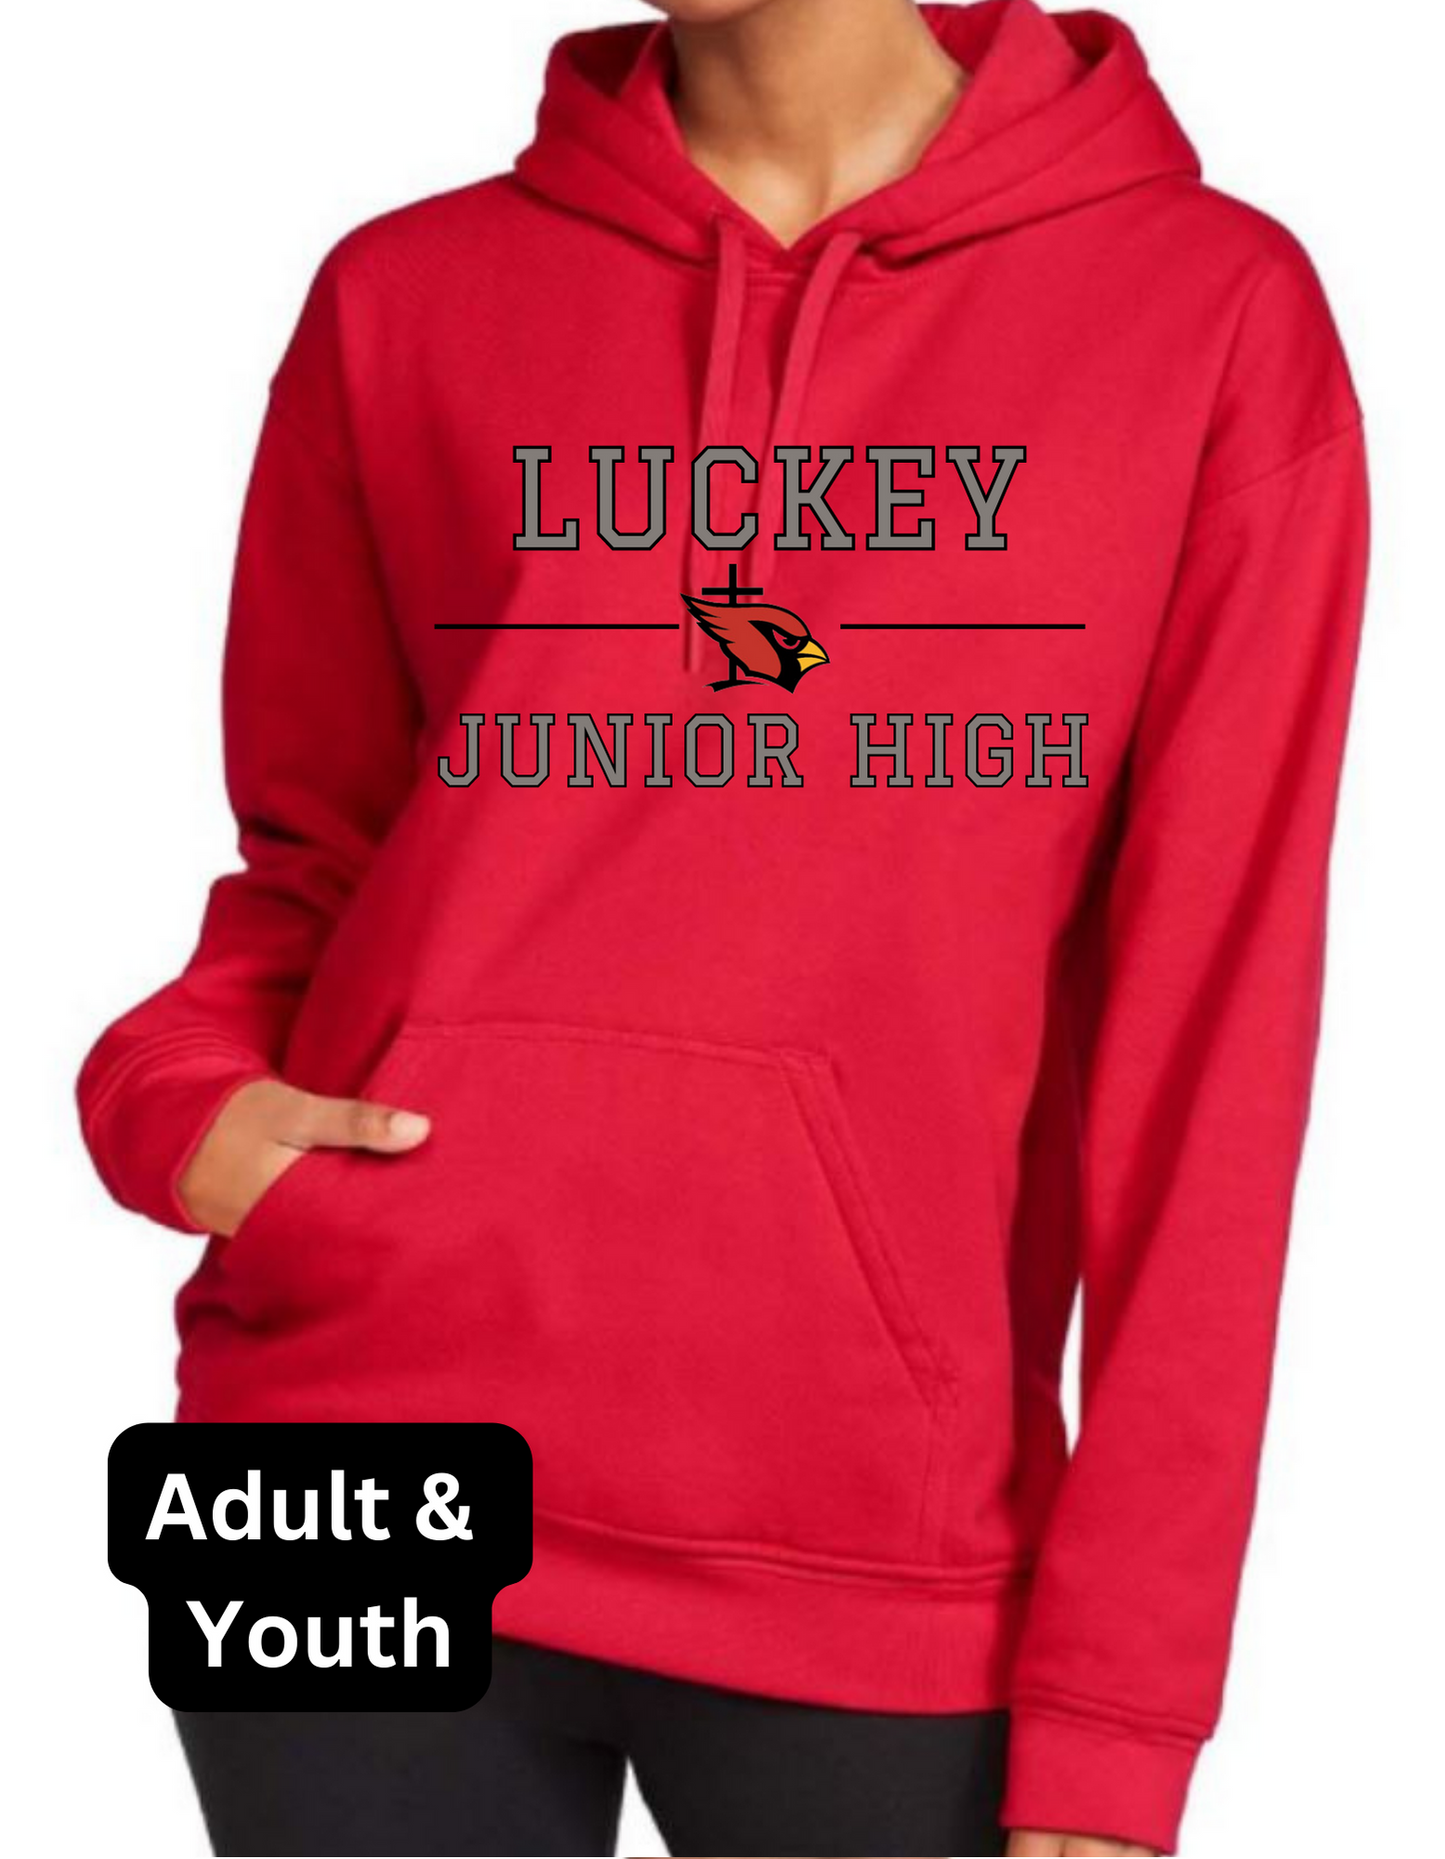 Luckey Junior High Hooded Sweatshirt